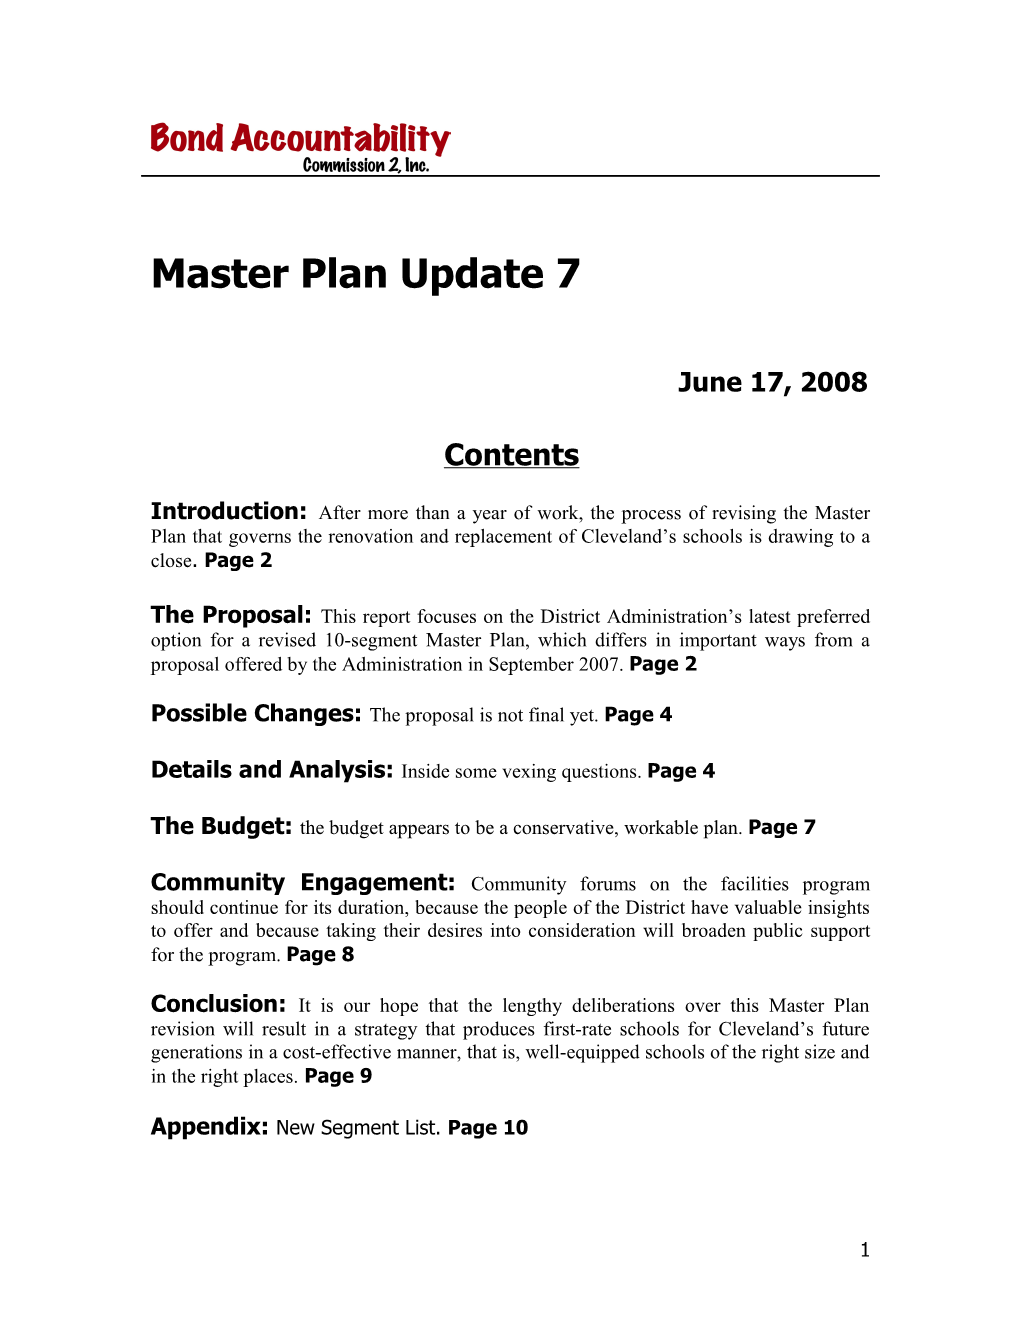 Outline for Master Plan Update 7